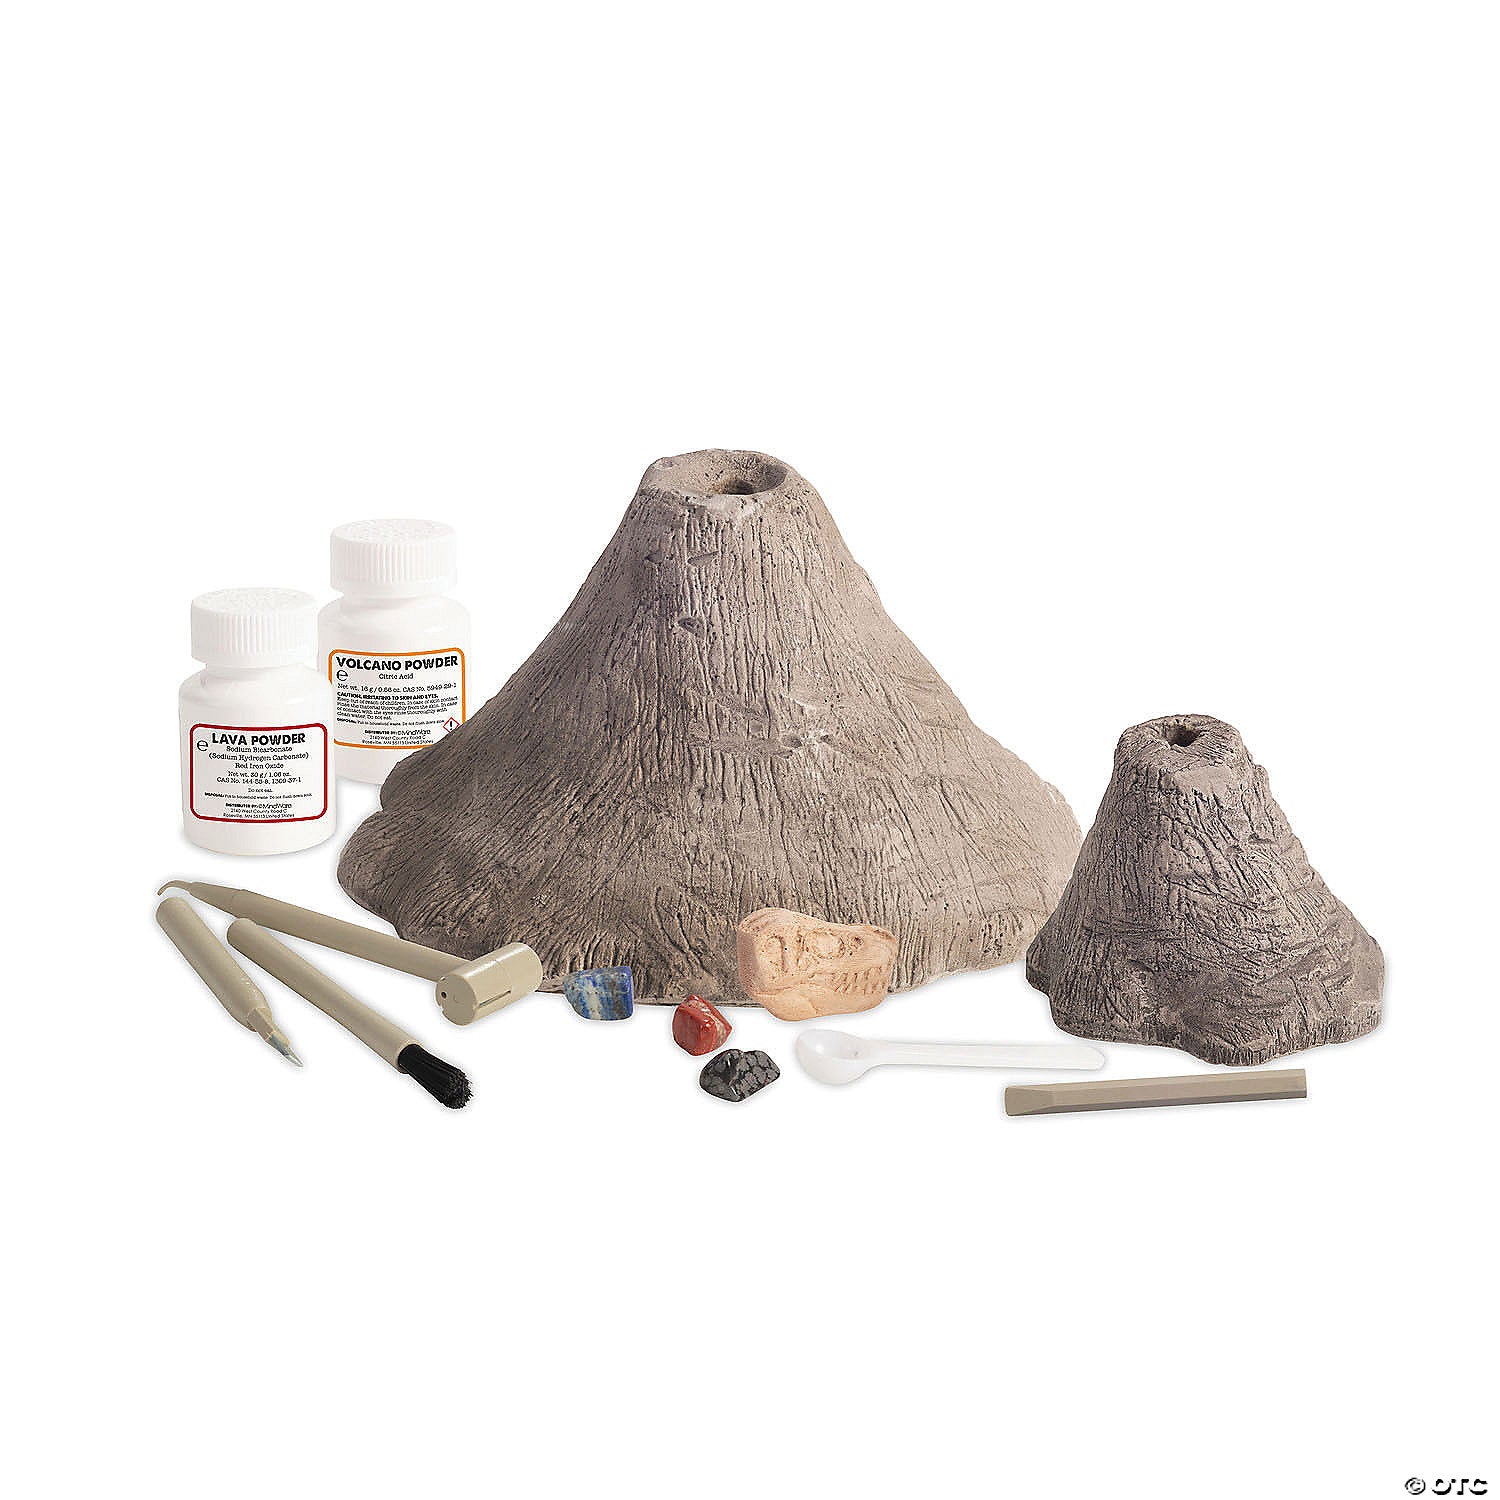 Dig It Up Prehistoric Volcano Kit